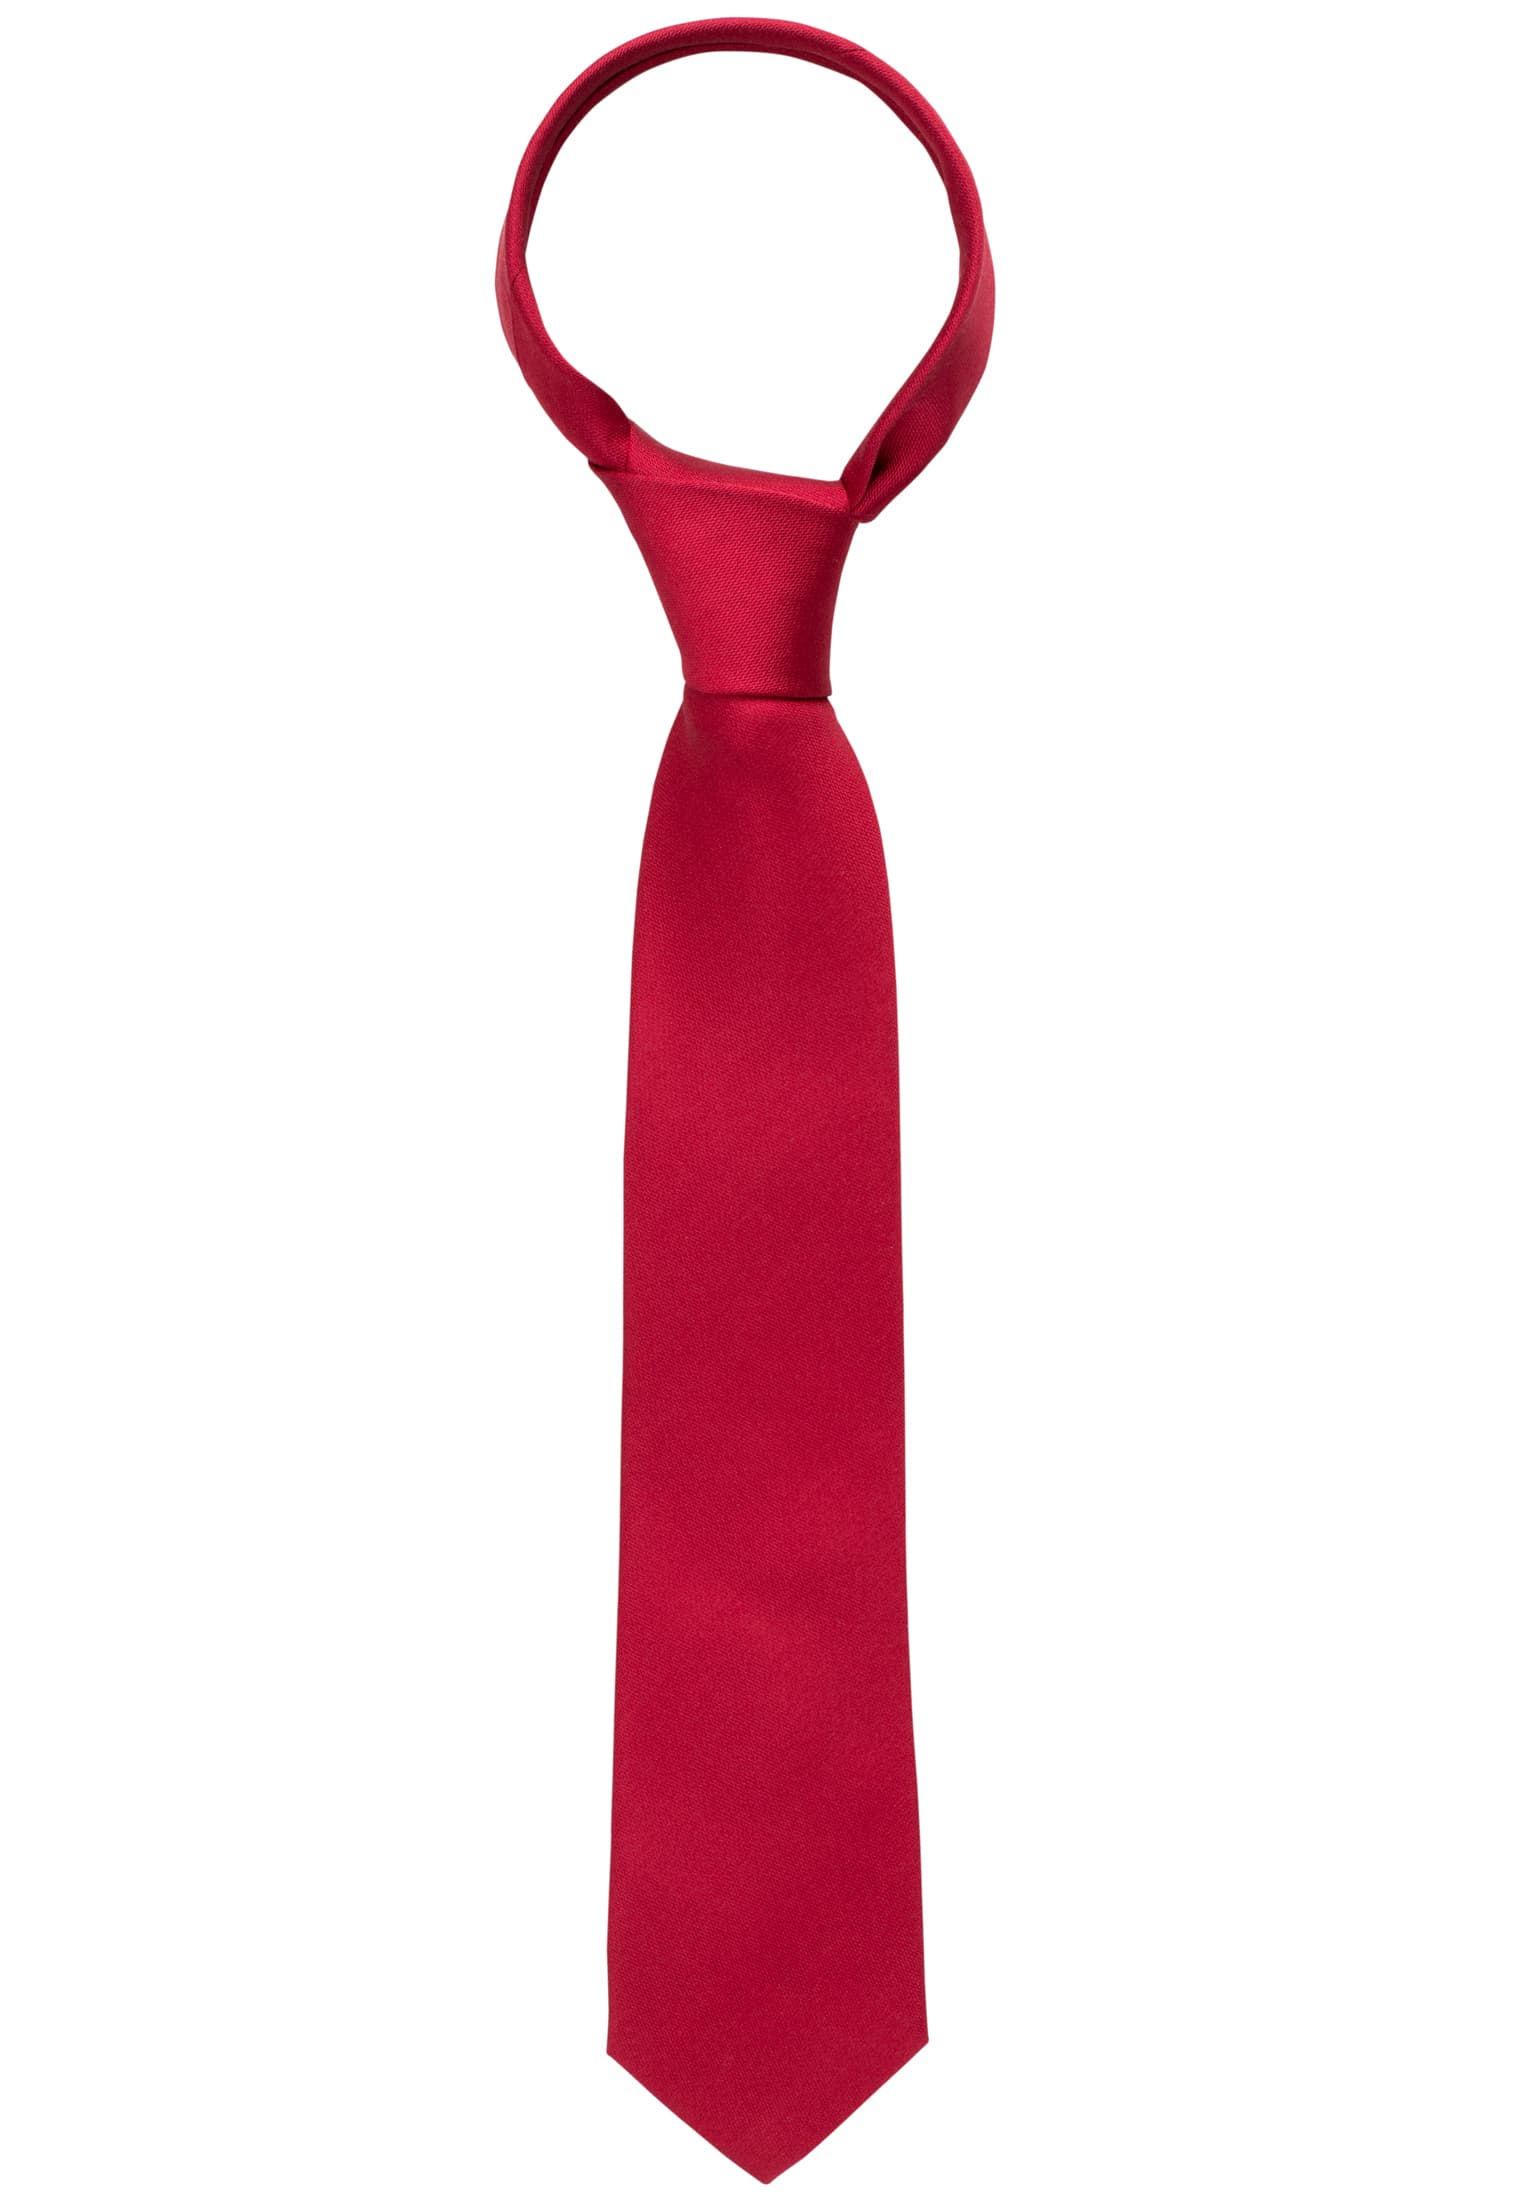 Krawatte in rot rot unifarben 142 1AC00020-05-01-142 | | 